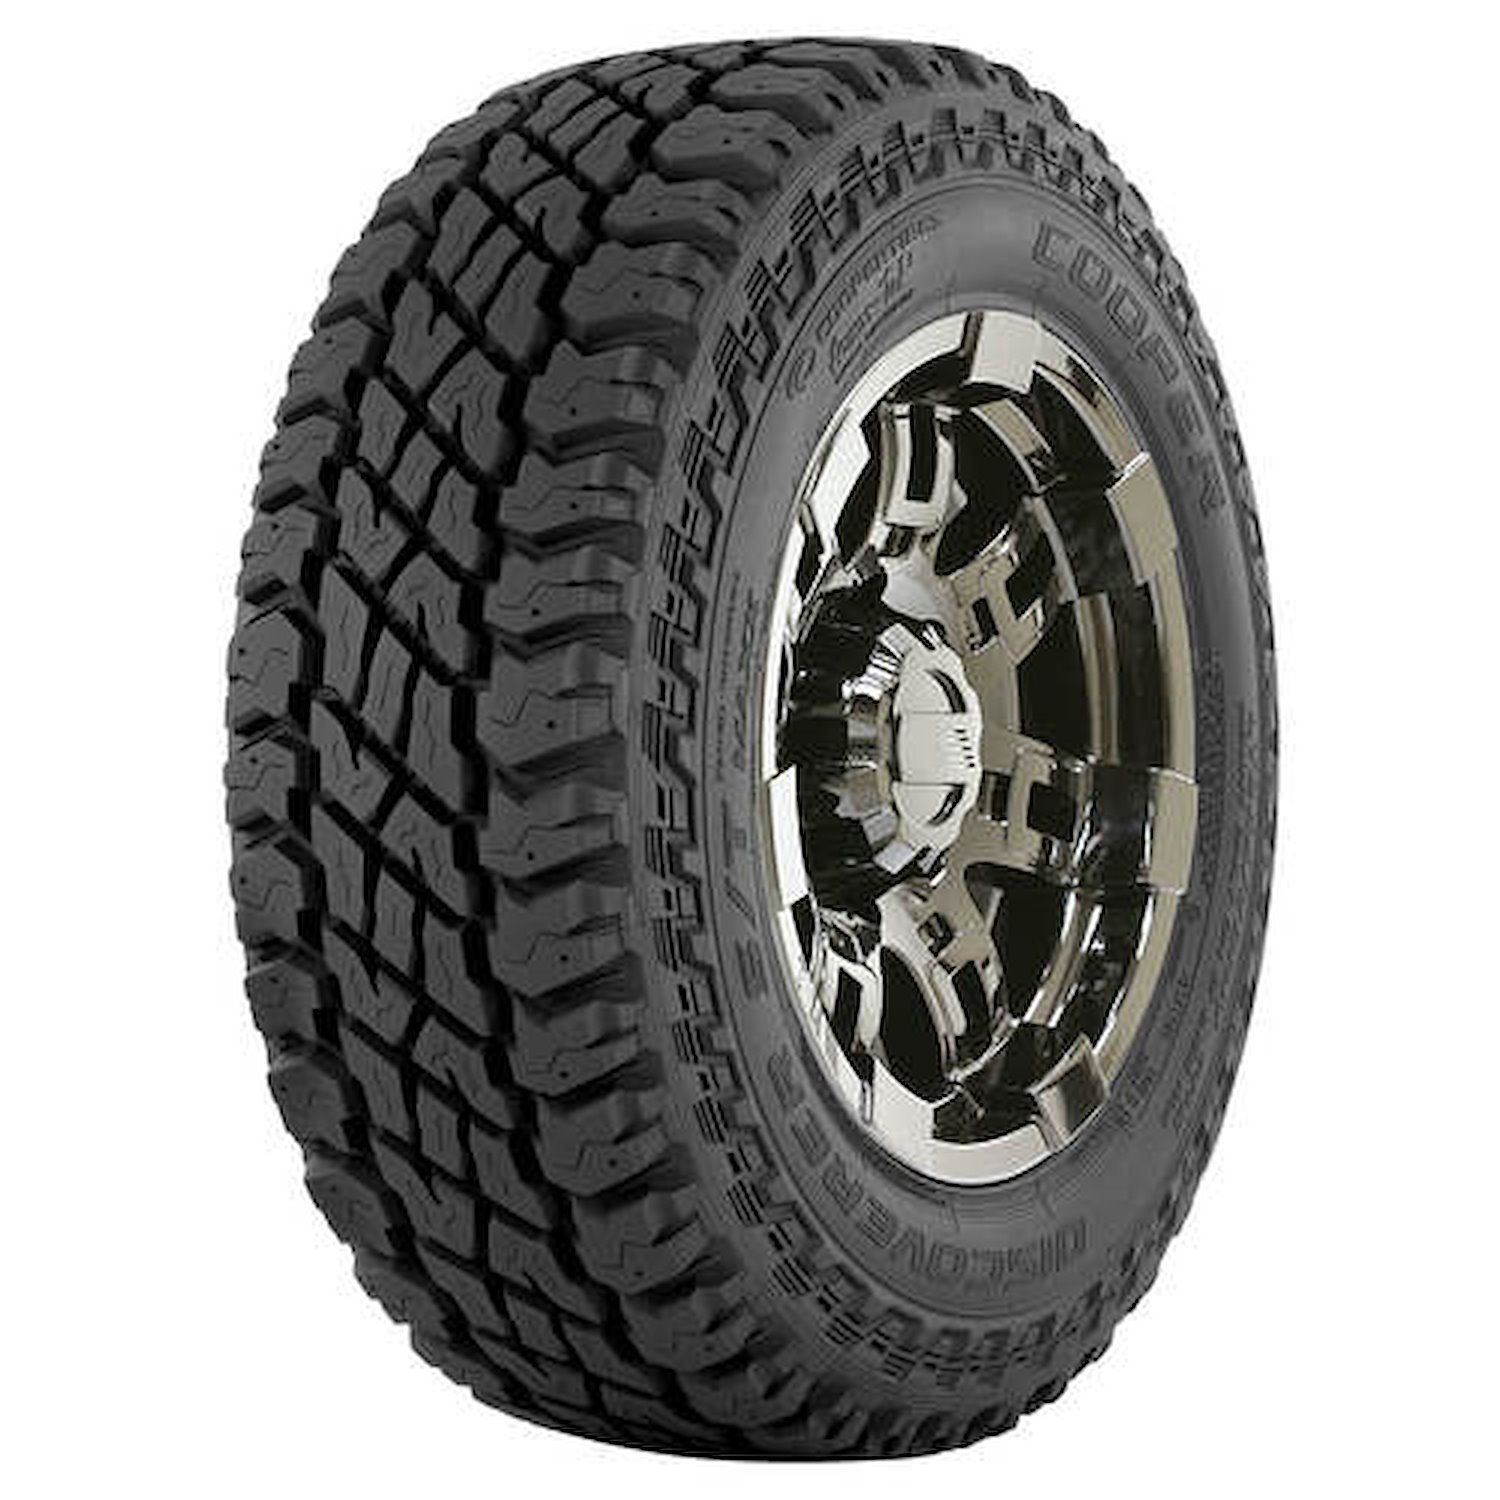 Discoverer S/T Maxx All-Terrain Tire, LT295/70R17